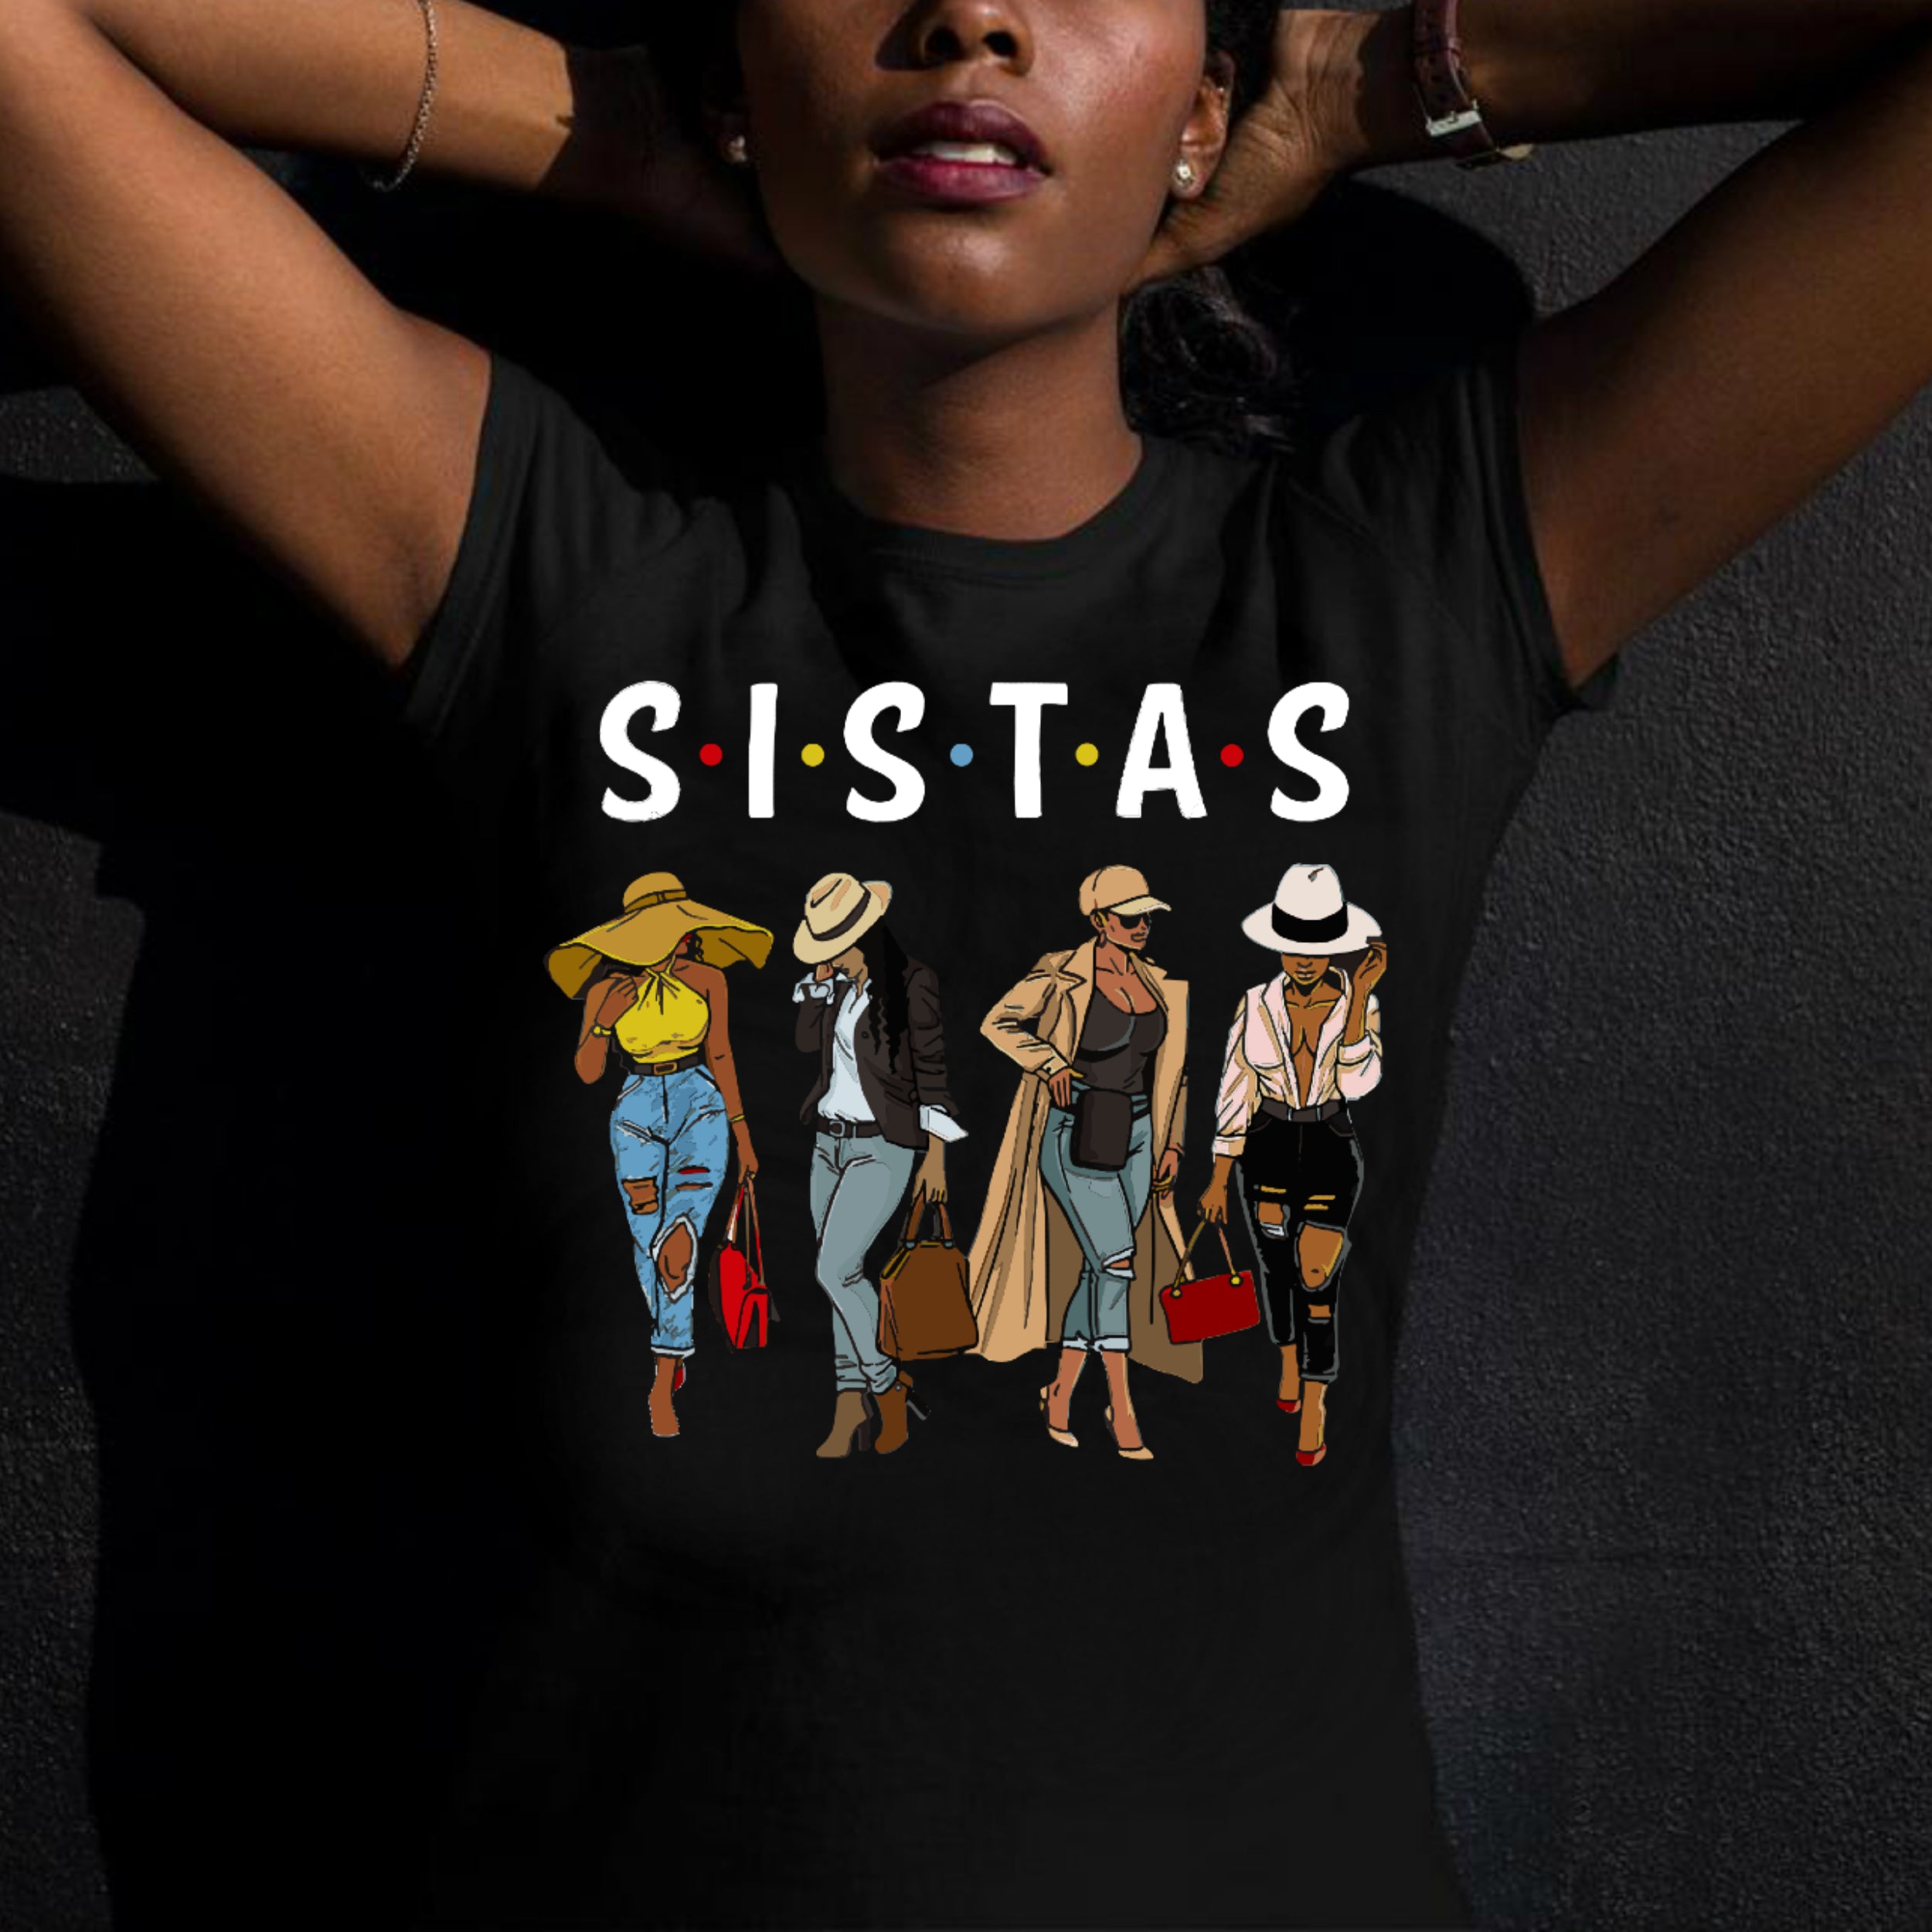 Sistas T Shirt Friends Together Dope Black Woman Afro Diva Nubian Melanin Girl Black Queen Power Blm Tee